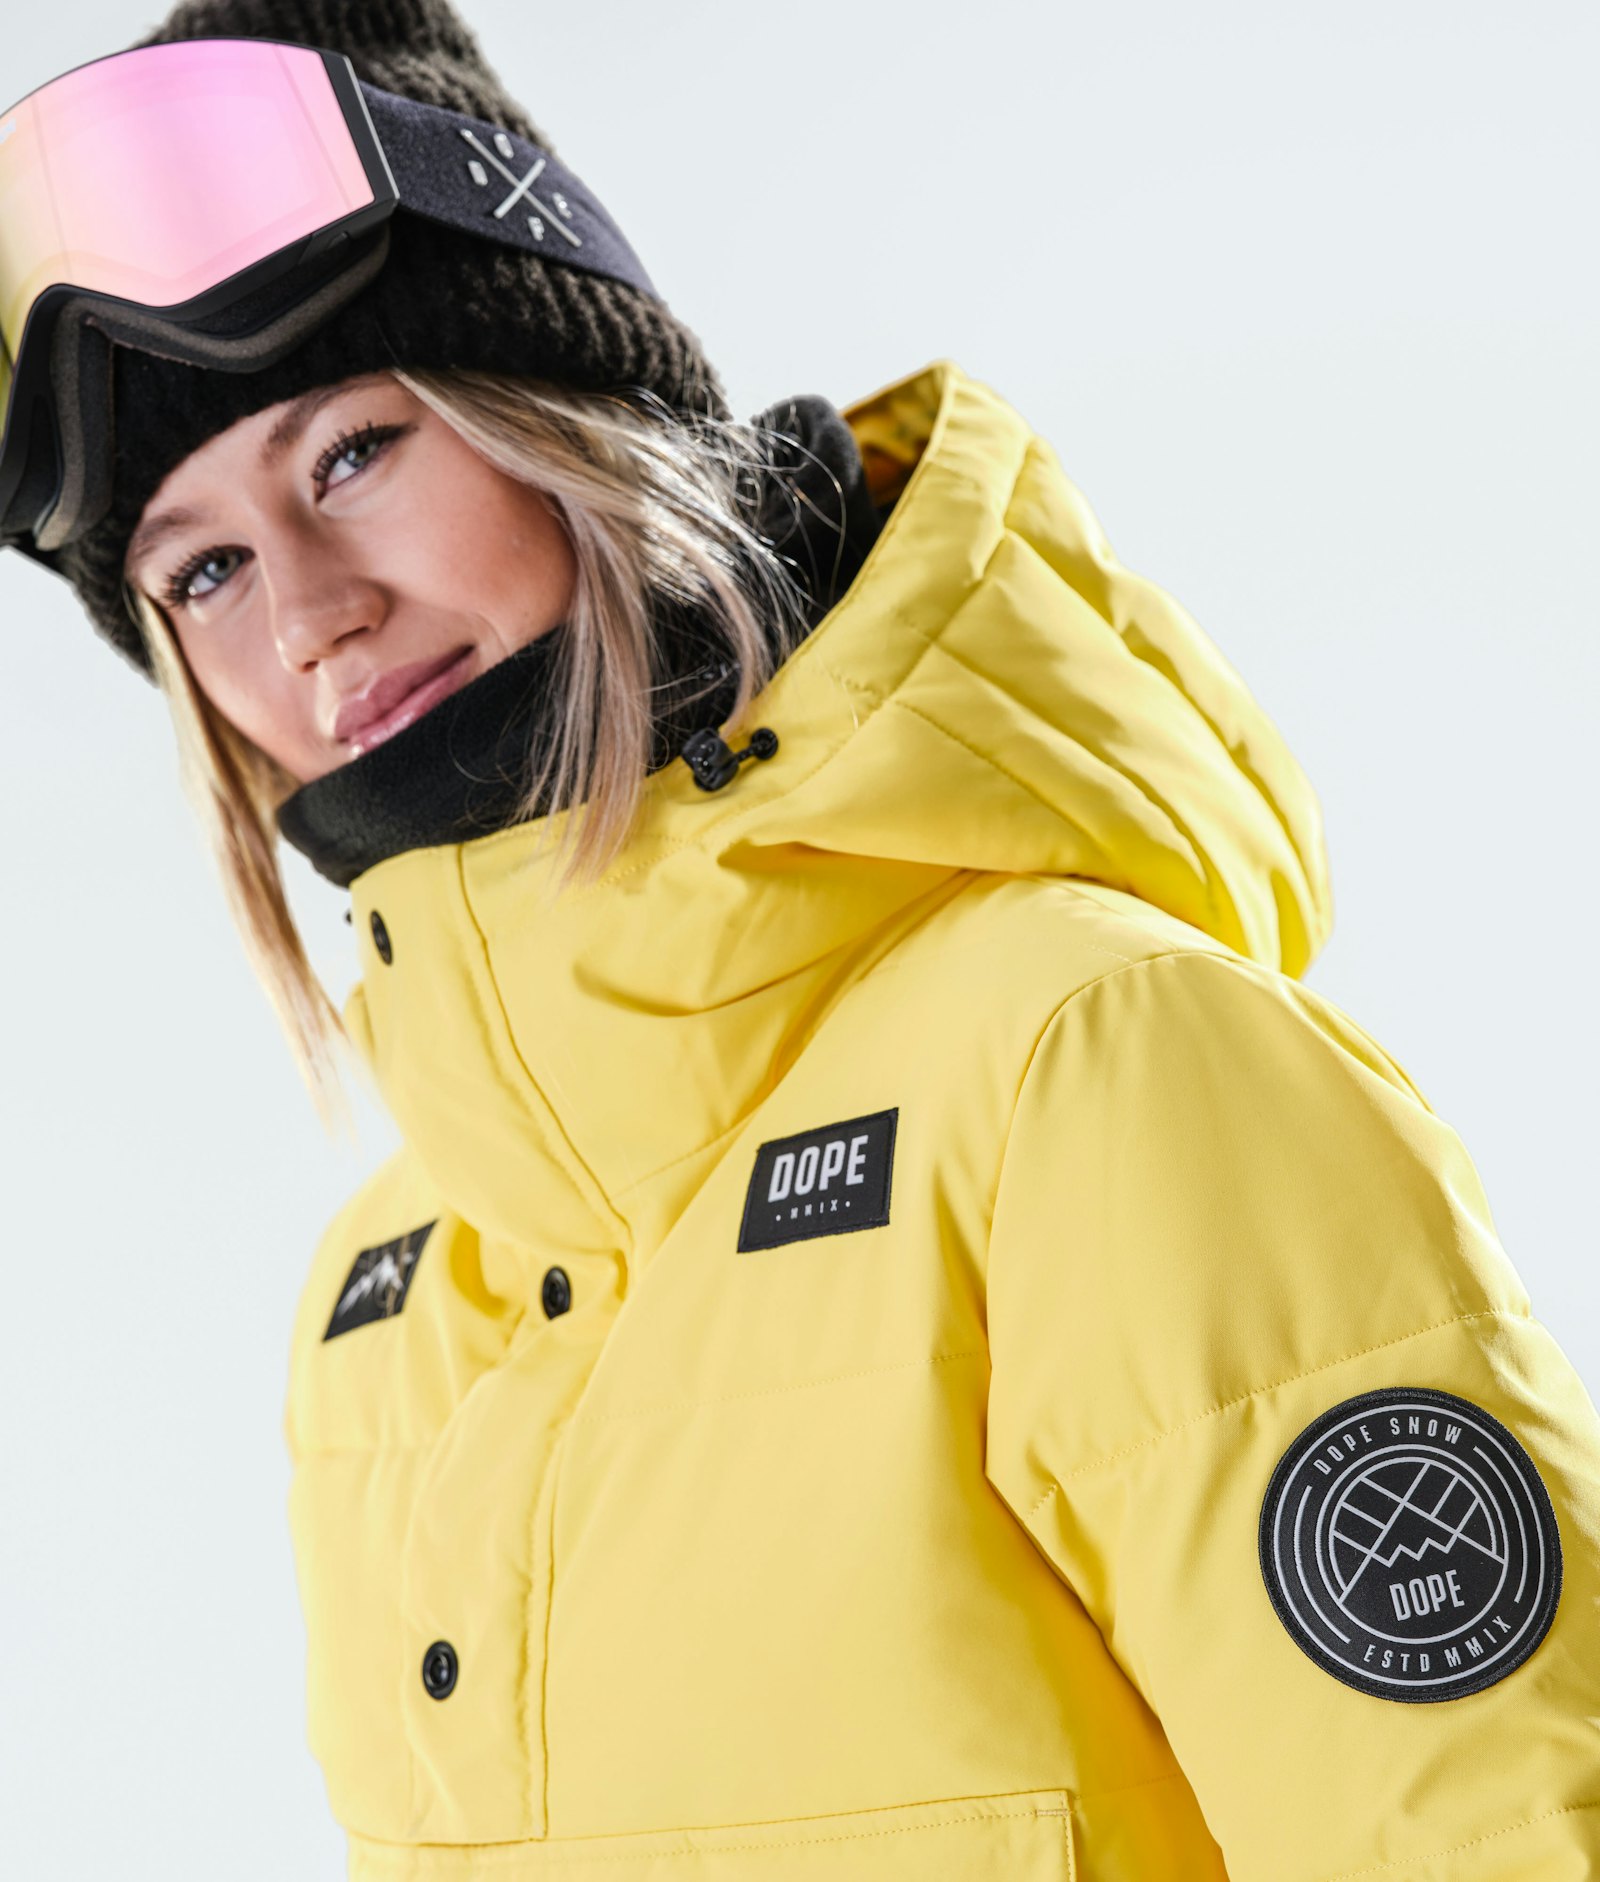 Puffer W 2020 Ski Jacket Women Faded Yellow